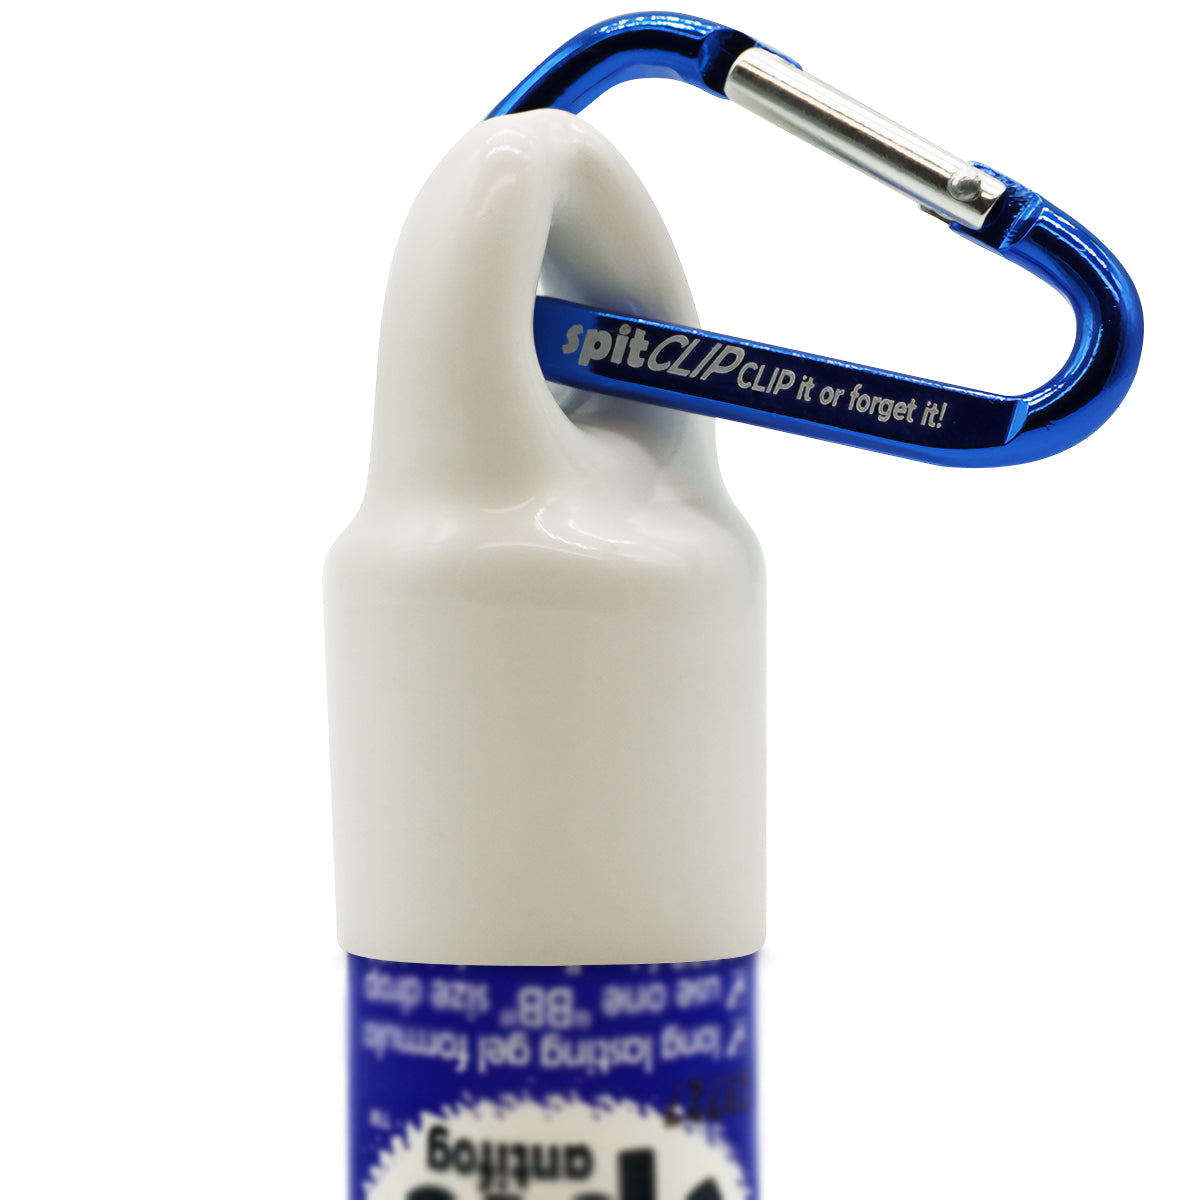 JAWS SpitClip Carabiner 1 oz. Bottle Retainer - Blue JAWS